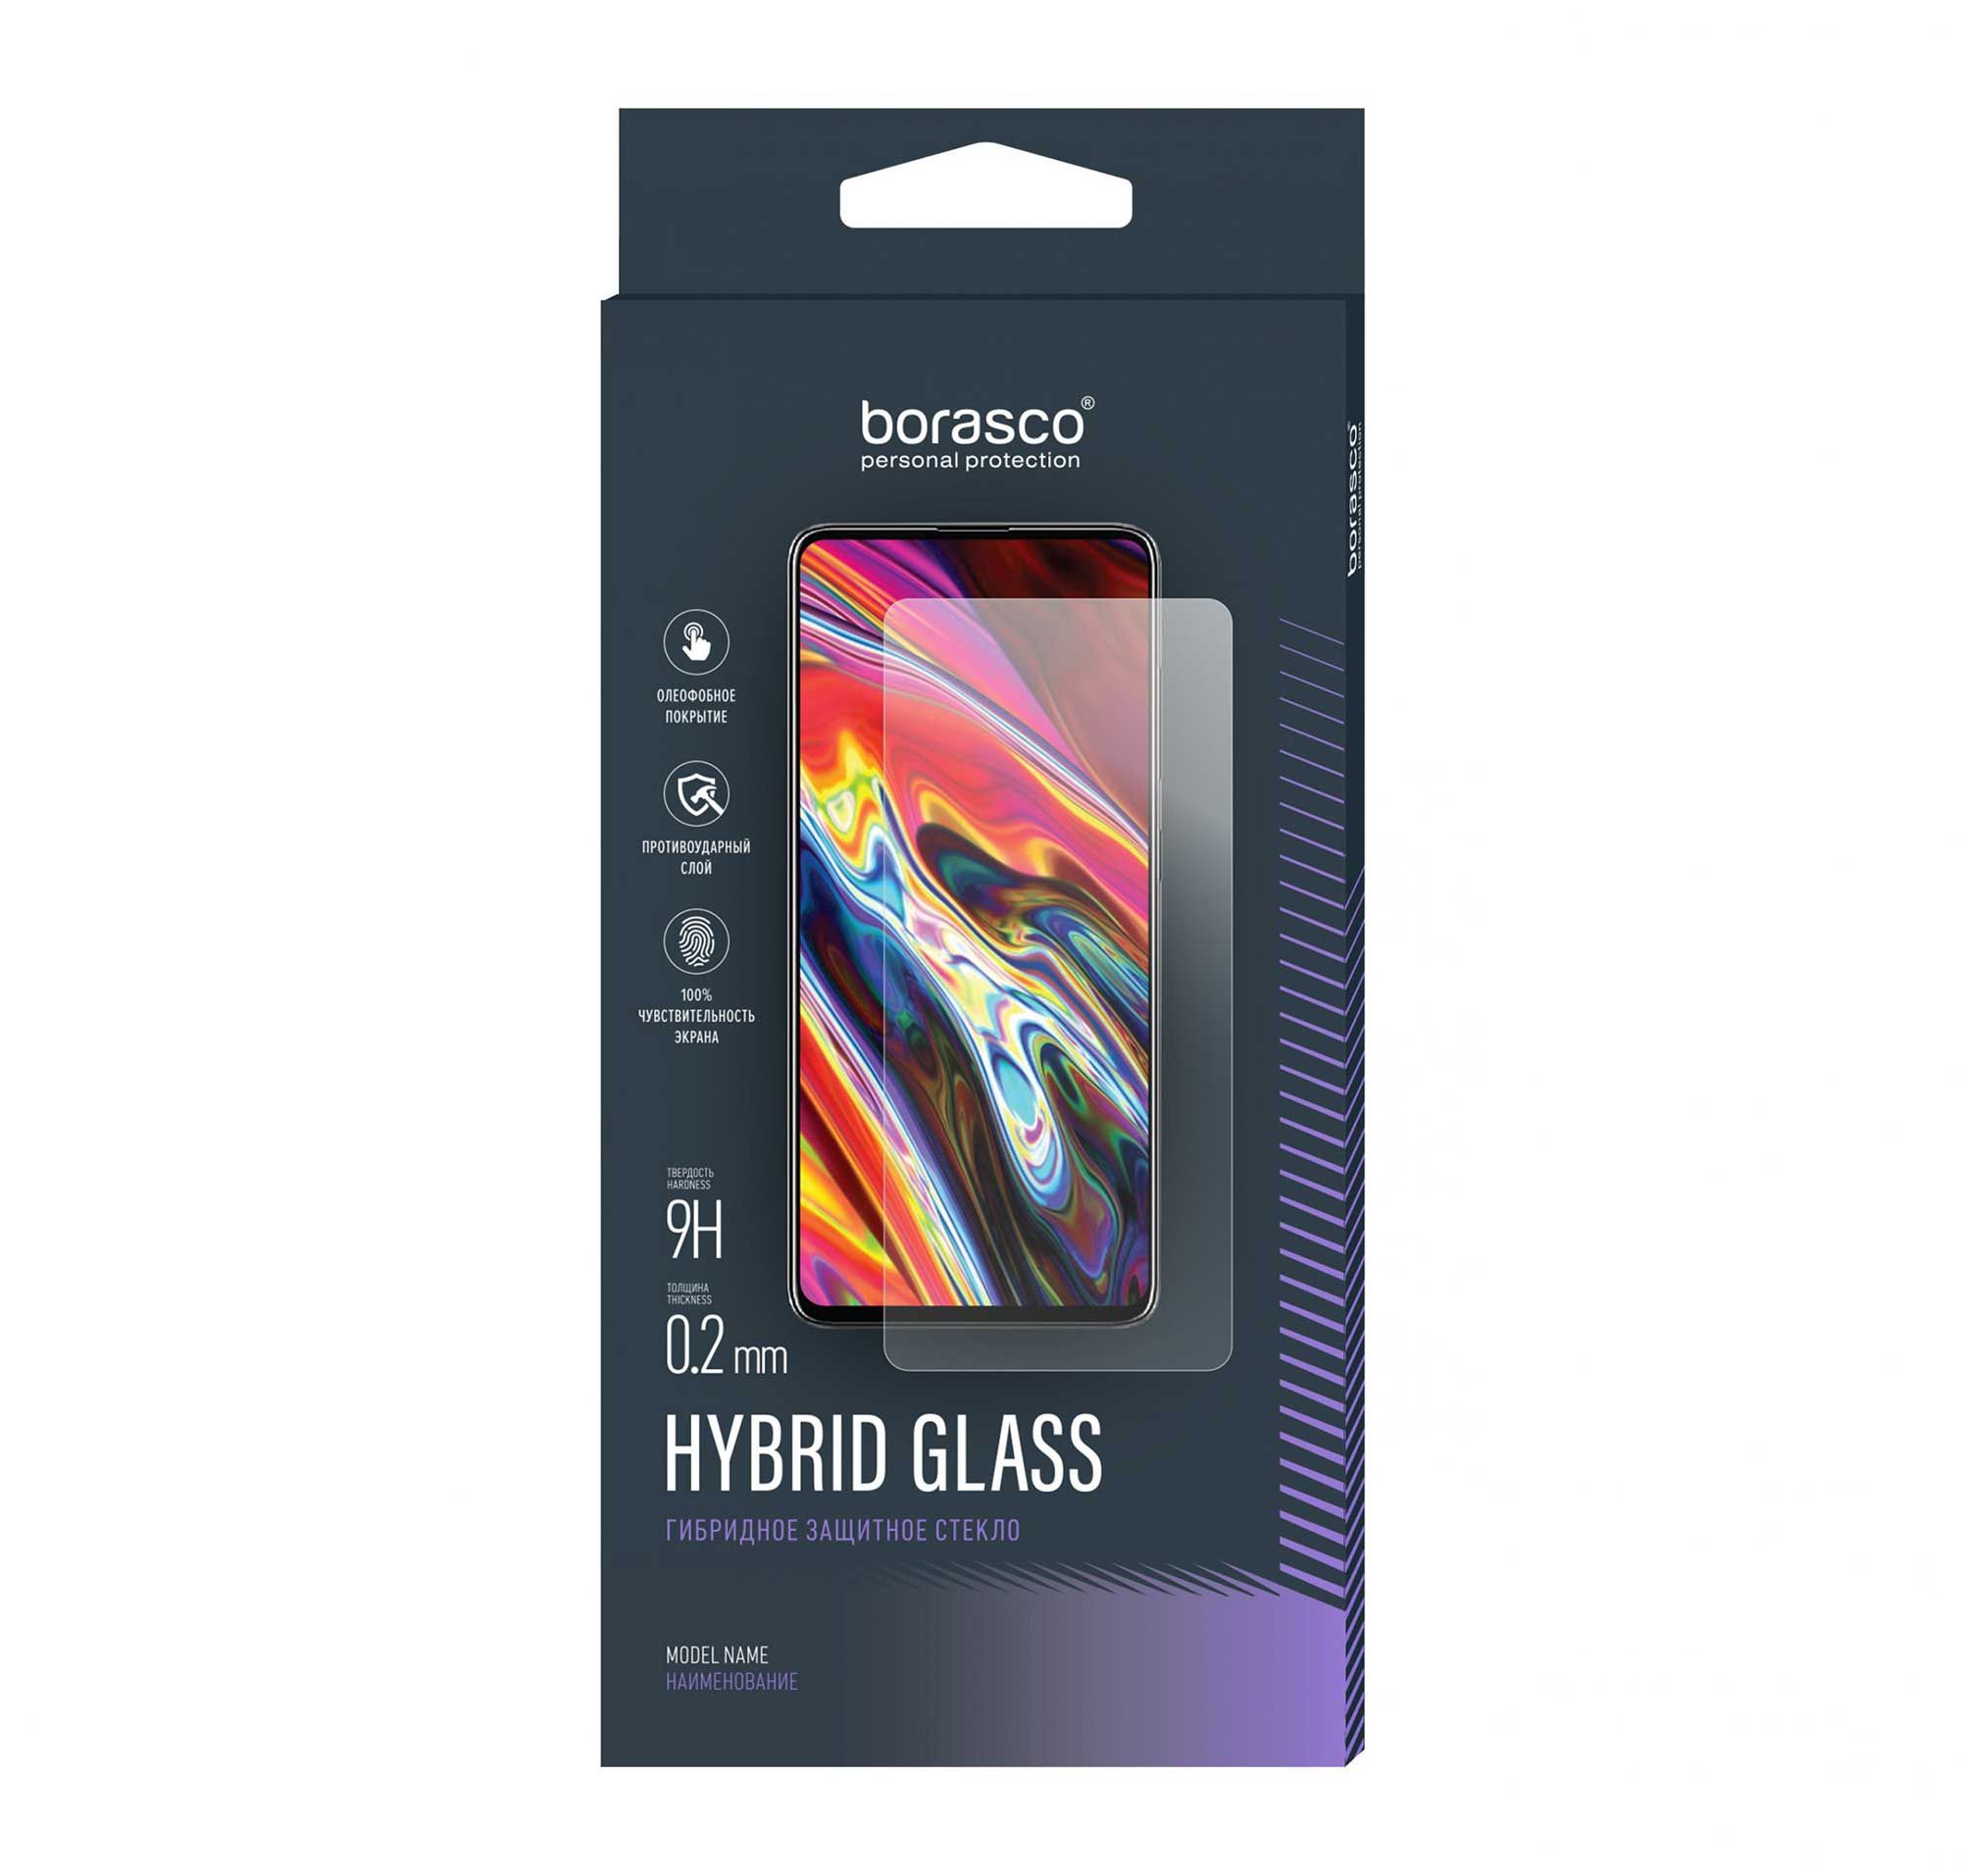 Защитное стекло Hybrid Glass для Asus Zenfone 9 чехол mypads нарисованный скелет на скейт борде для asus zenfone 9 ai2202 задняя панель накладка бампер